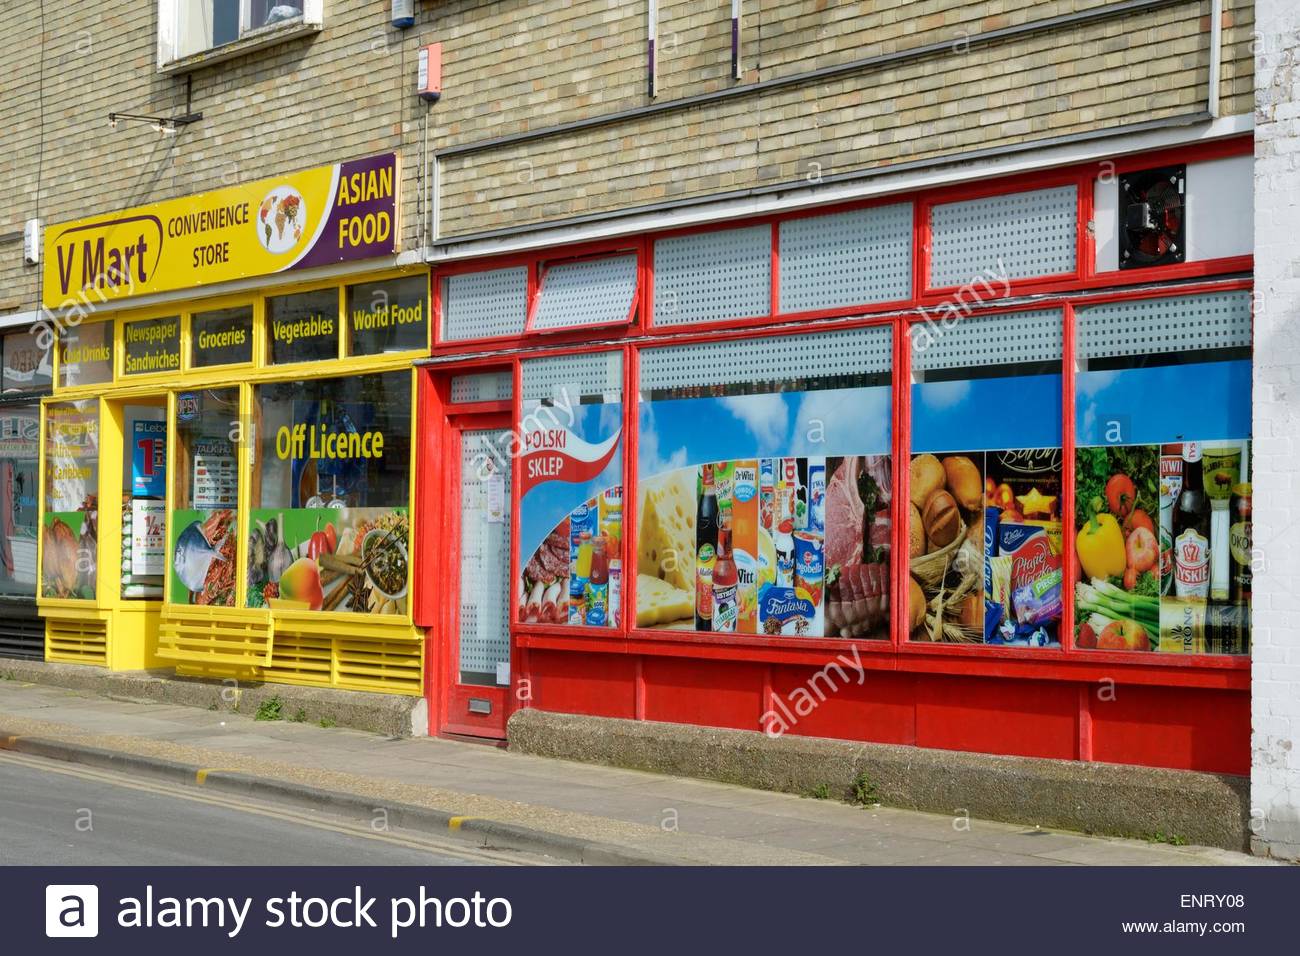 The V Mart (Asian Food) Convenience Store and Polski Sklep (Polish Stock  Photo - Alamy